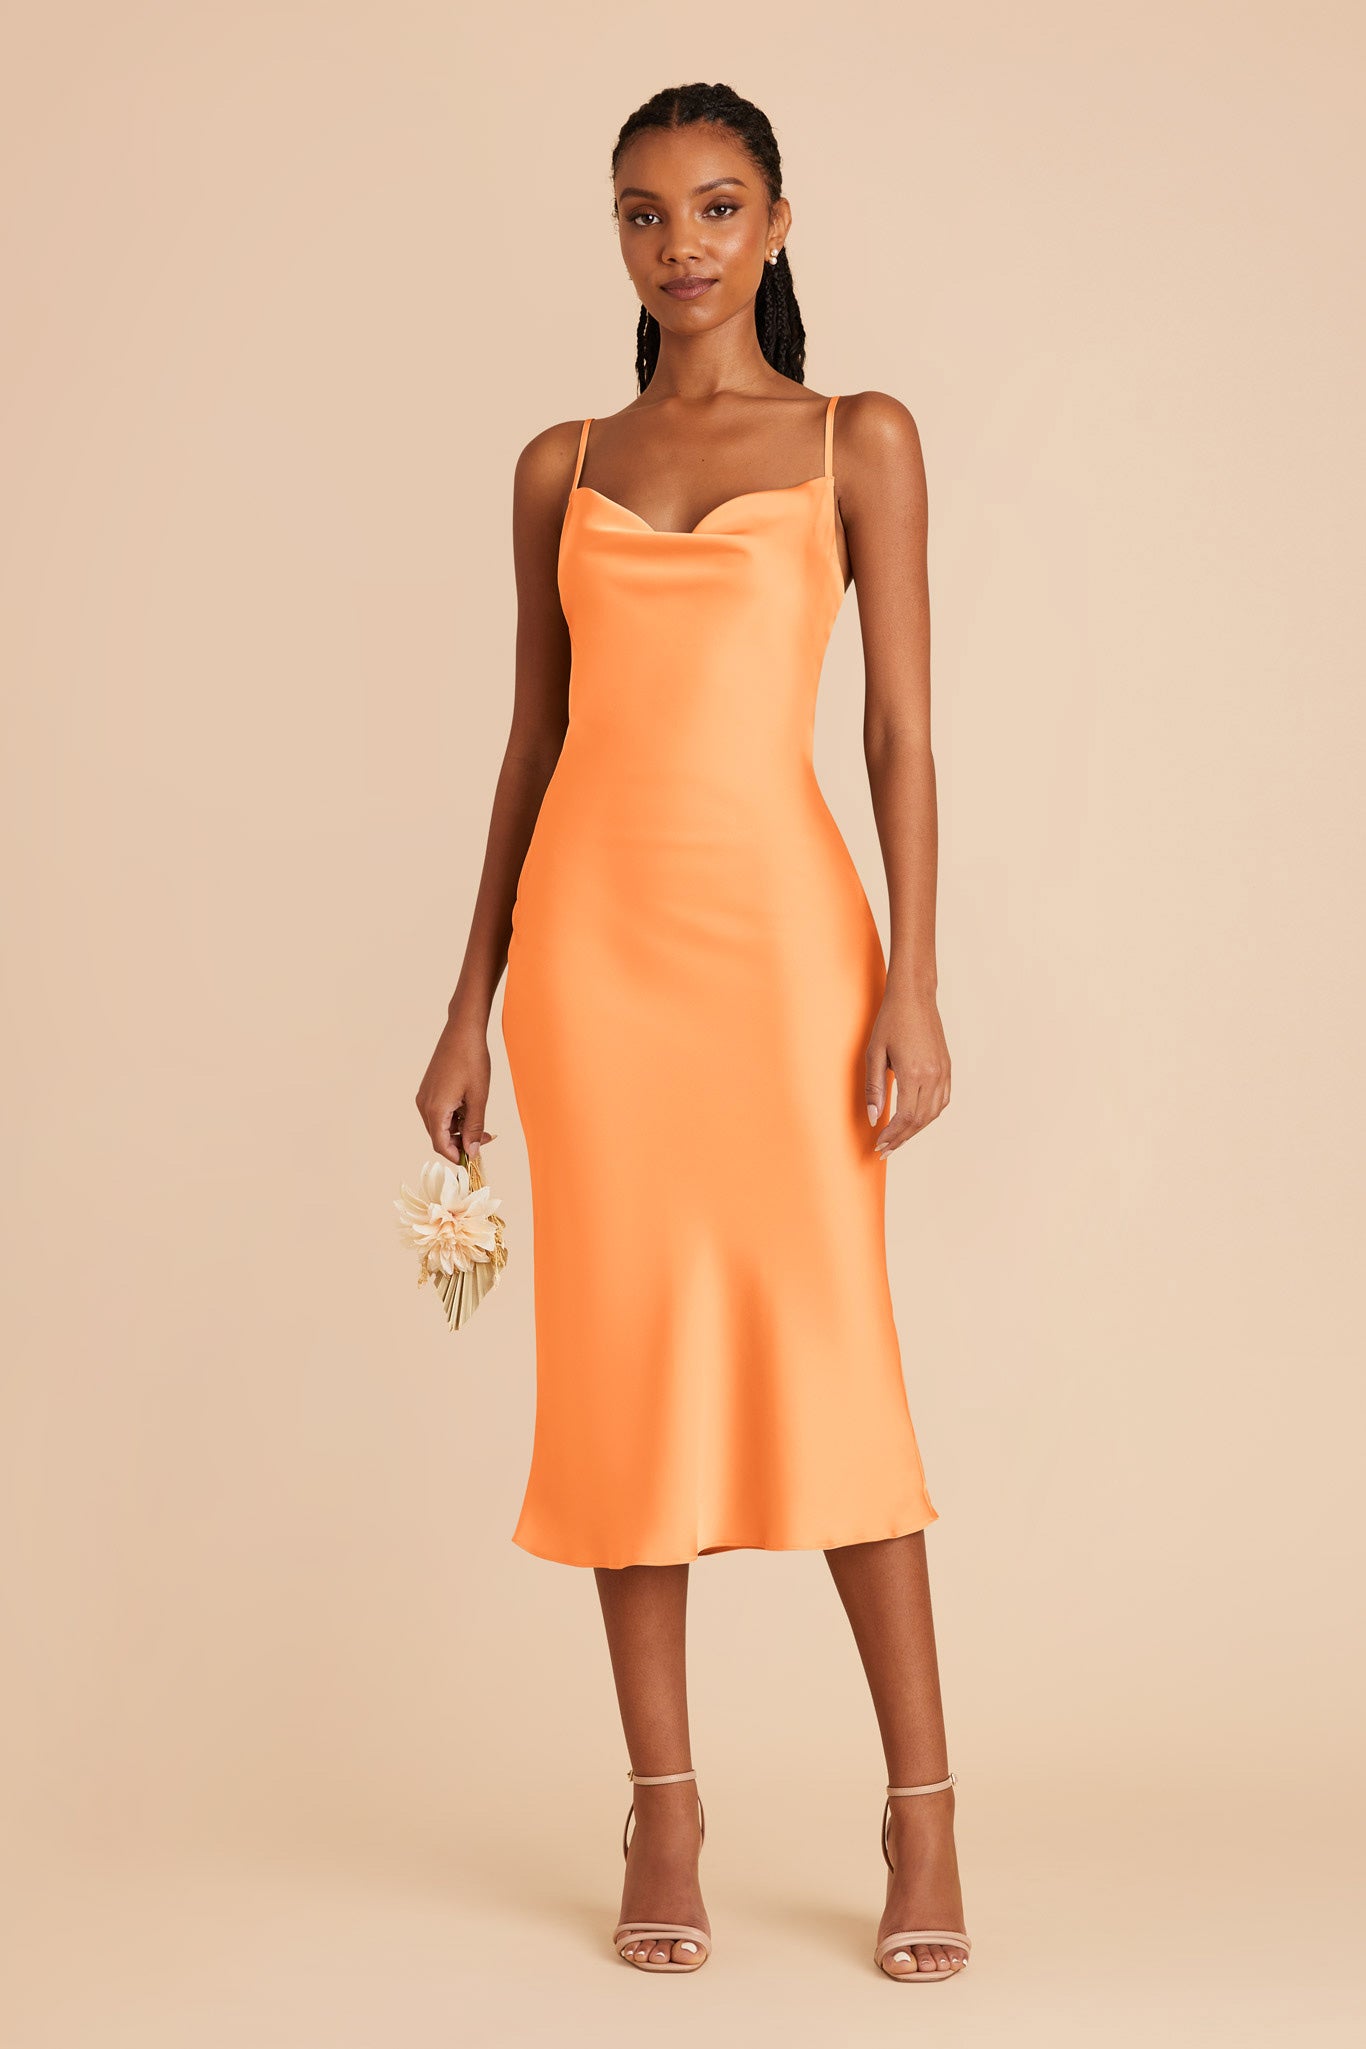 Apricot Lisa Matte Satin Dress by Birdy Grey